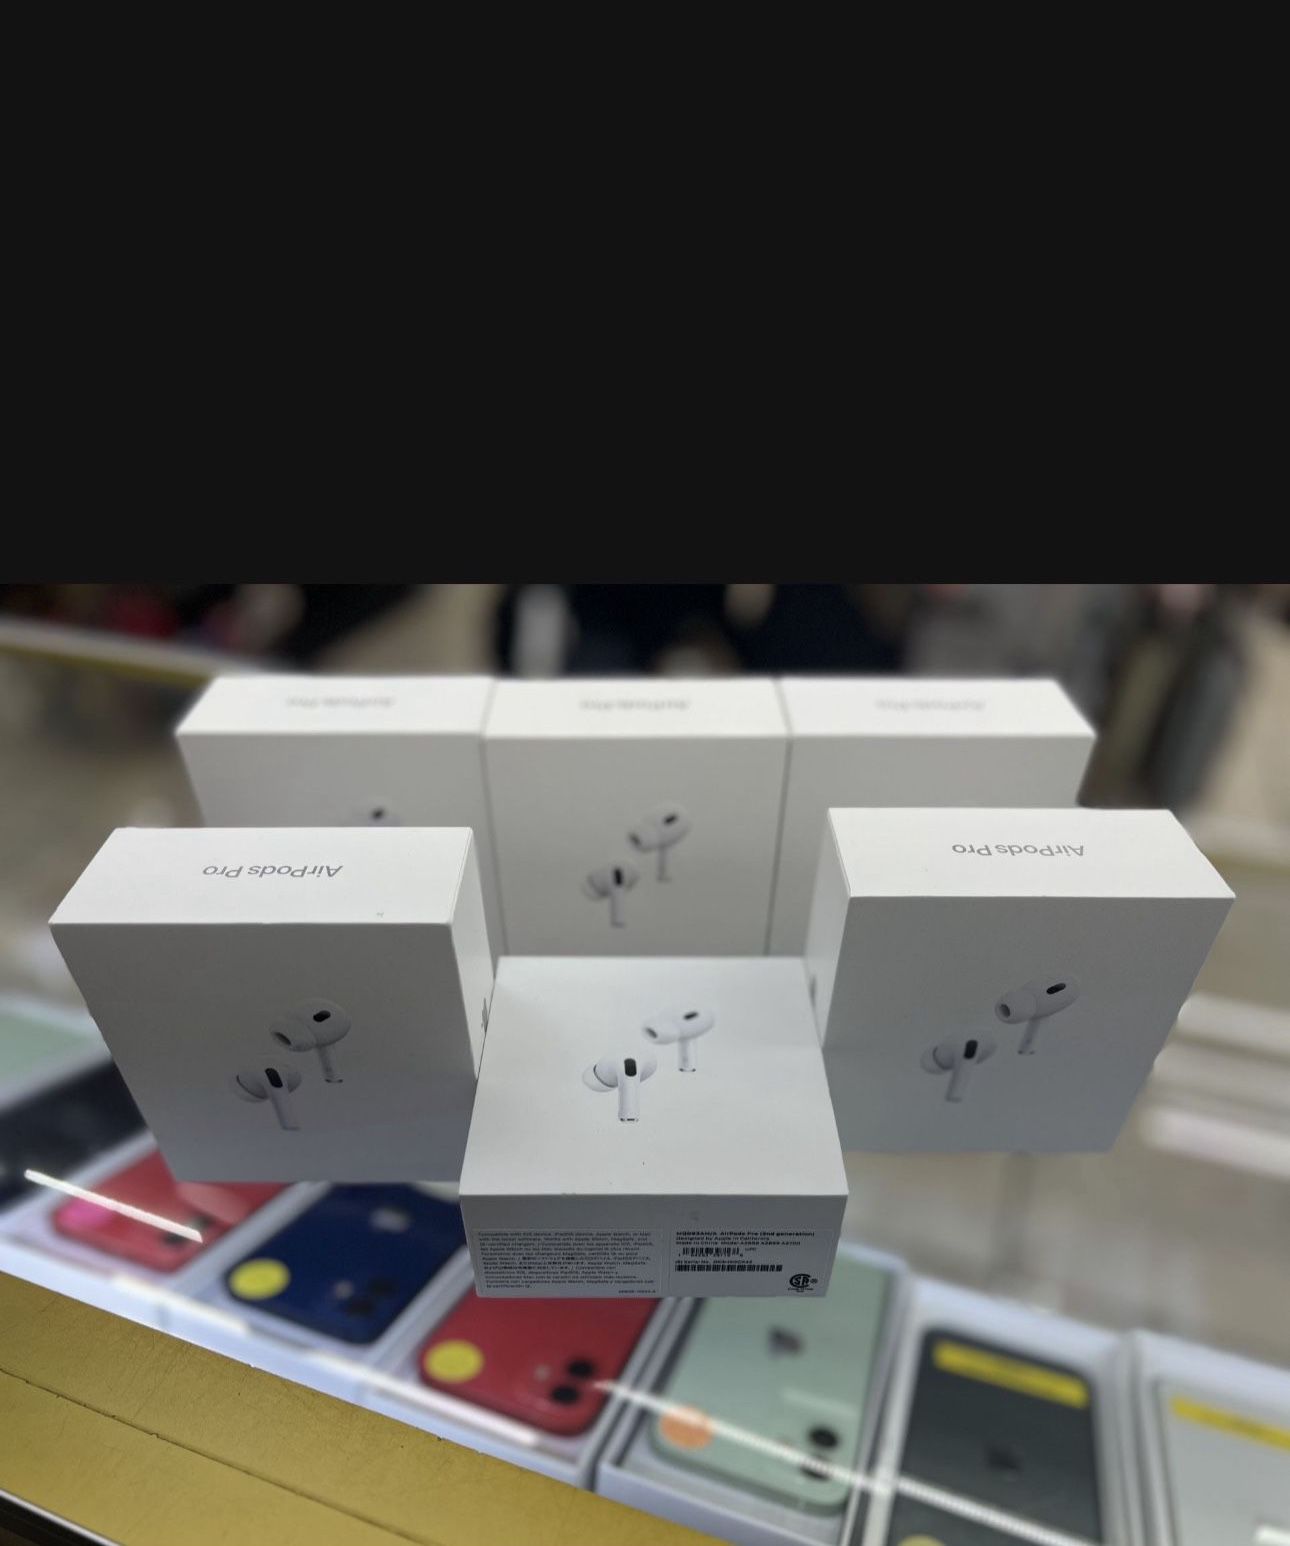 Brand New Original Apple AirPods Pro 2nd Generation 🔥📱🖥️⌚️on Sale 🔥⌚️🖥️📱